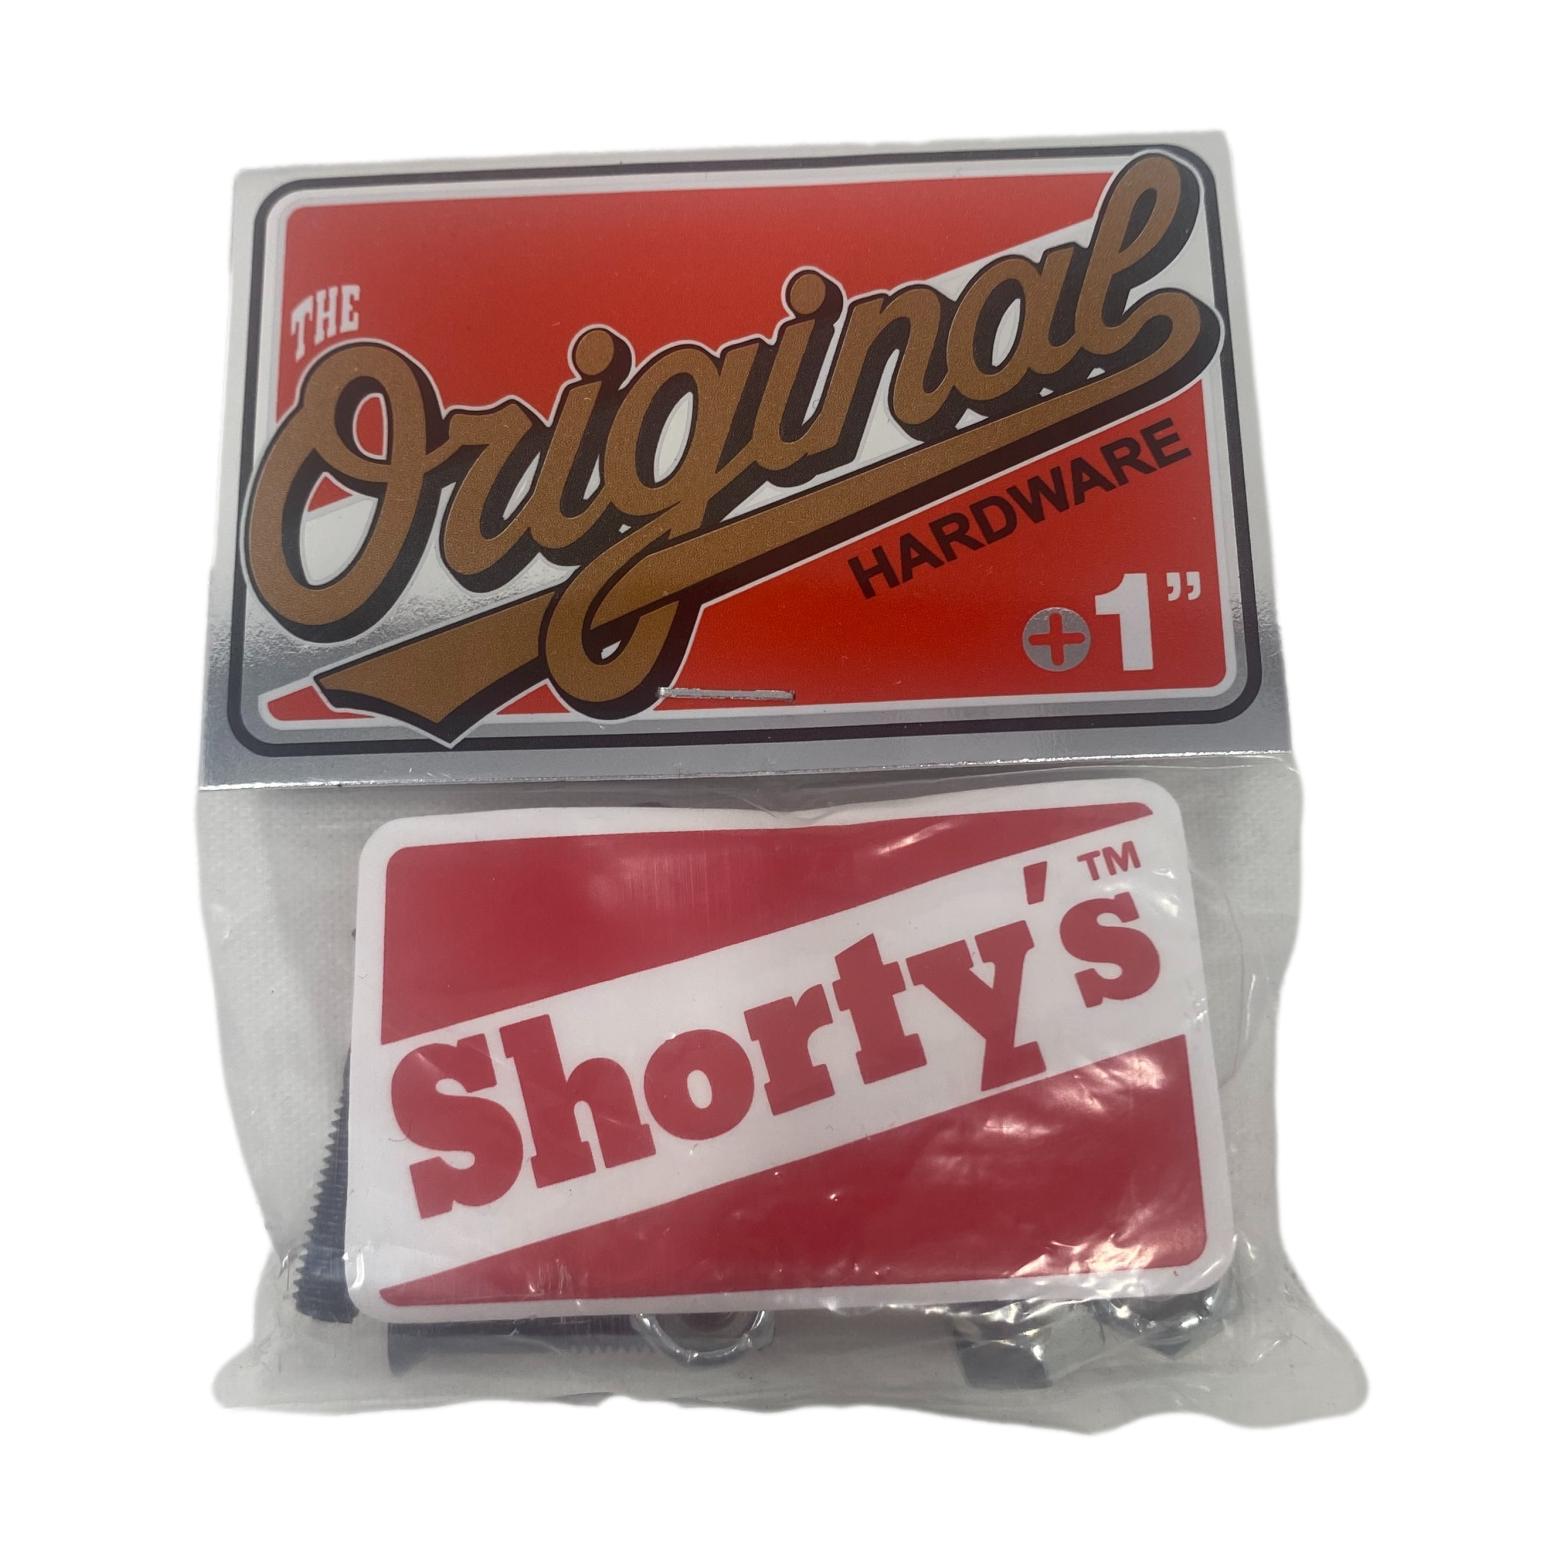 Shorty's Original Hardware